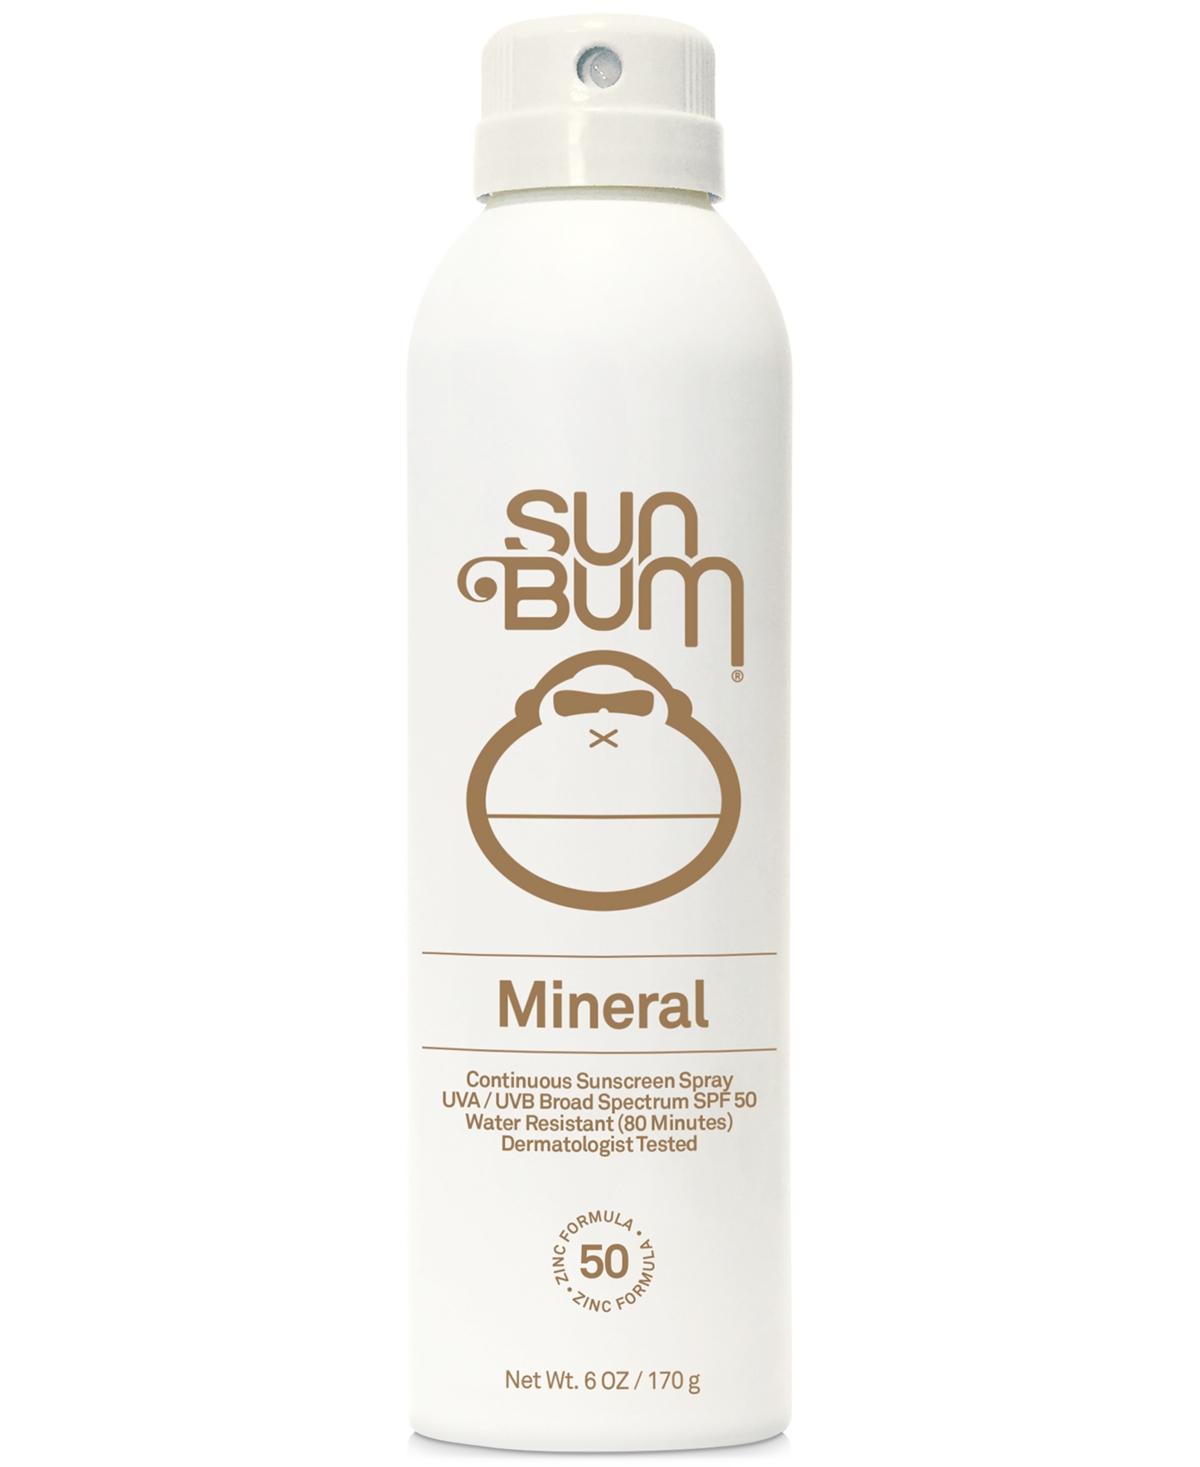 Mineral Continuous Sunscreen Spray Spf 50, 6 oz.